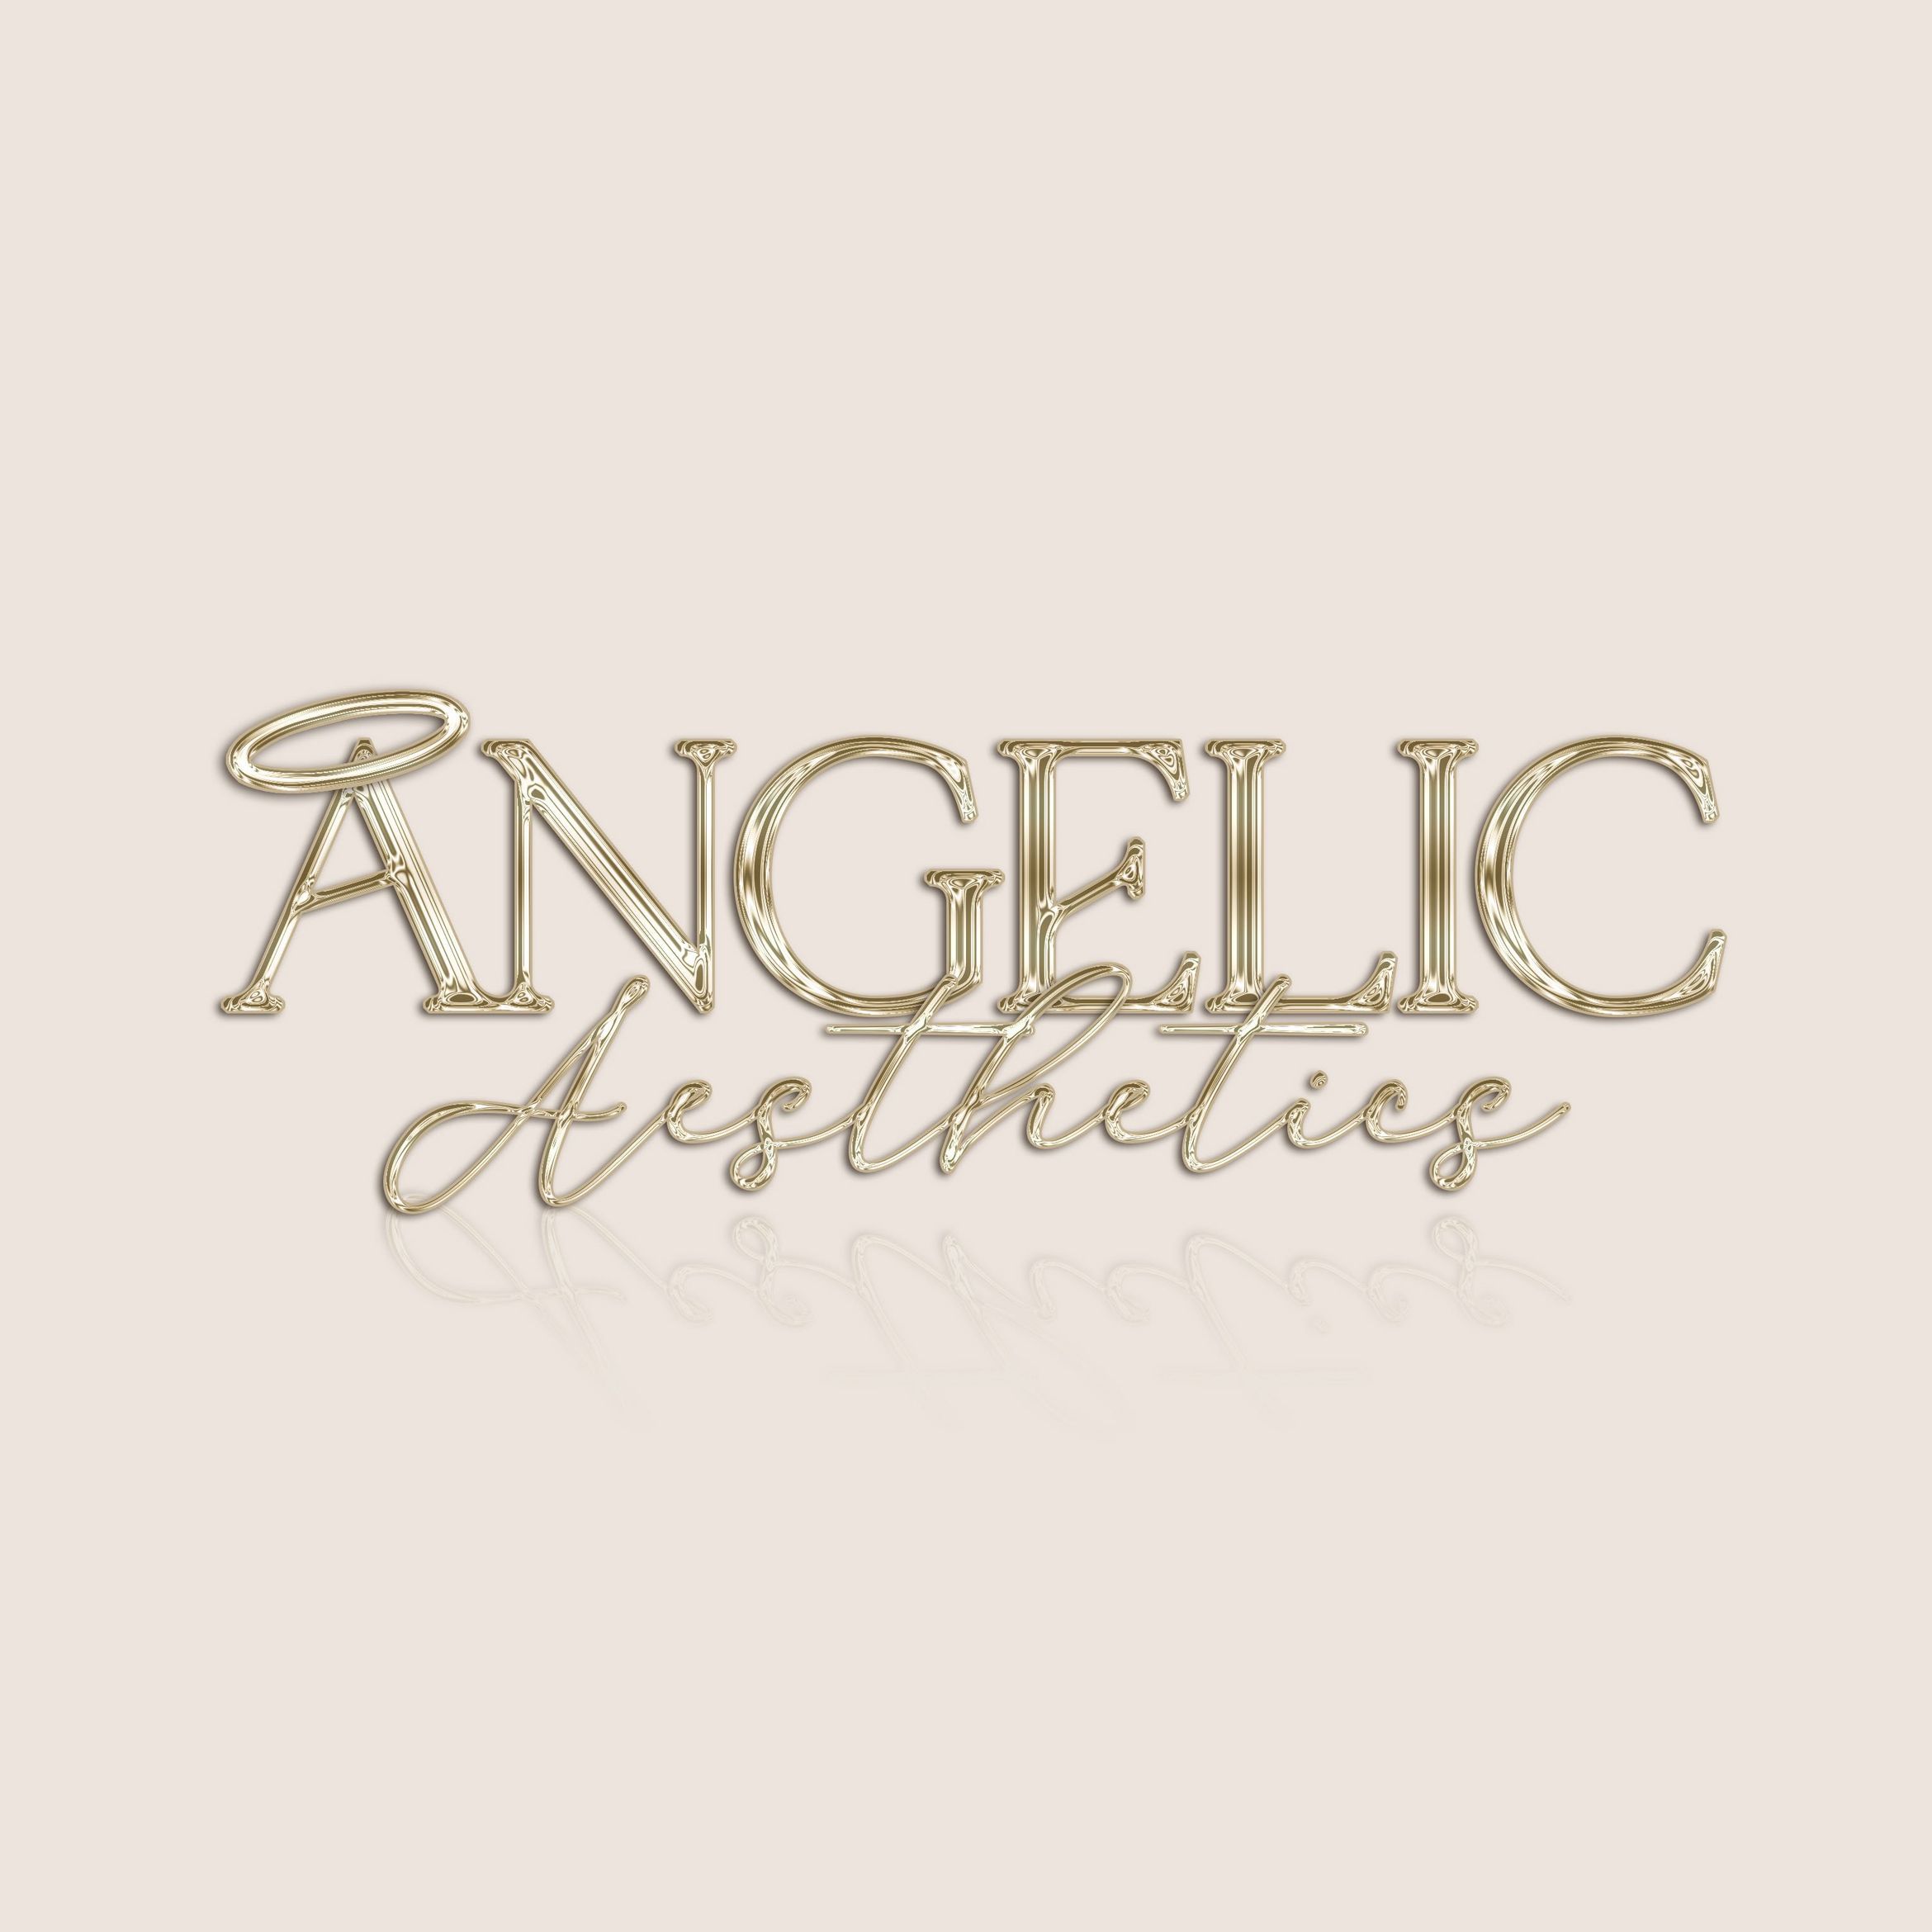 AngelicAesthetics, 19 Falcon House, Deer Park Road London, SW19 3UX, London, London